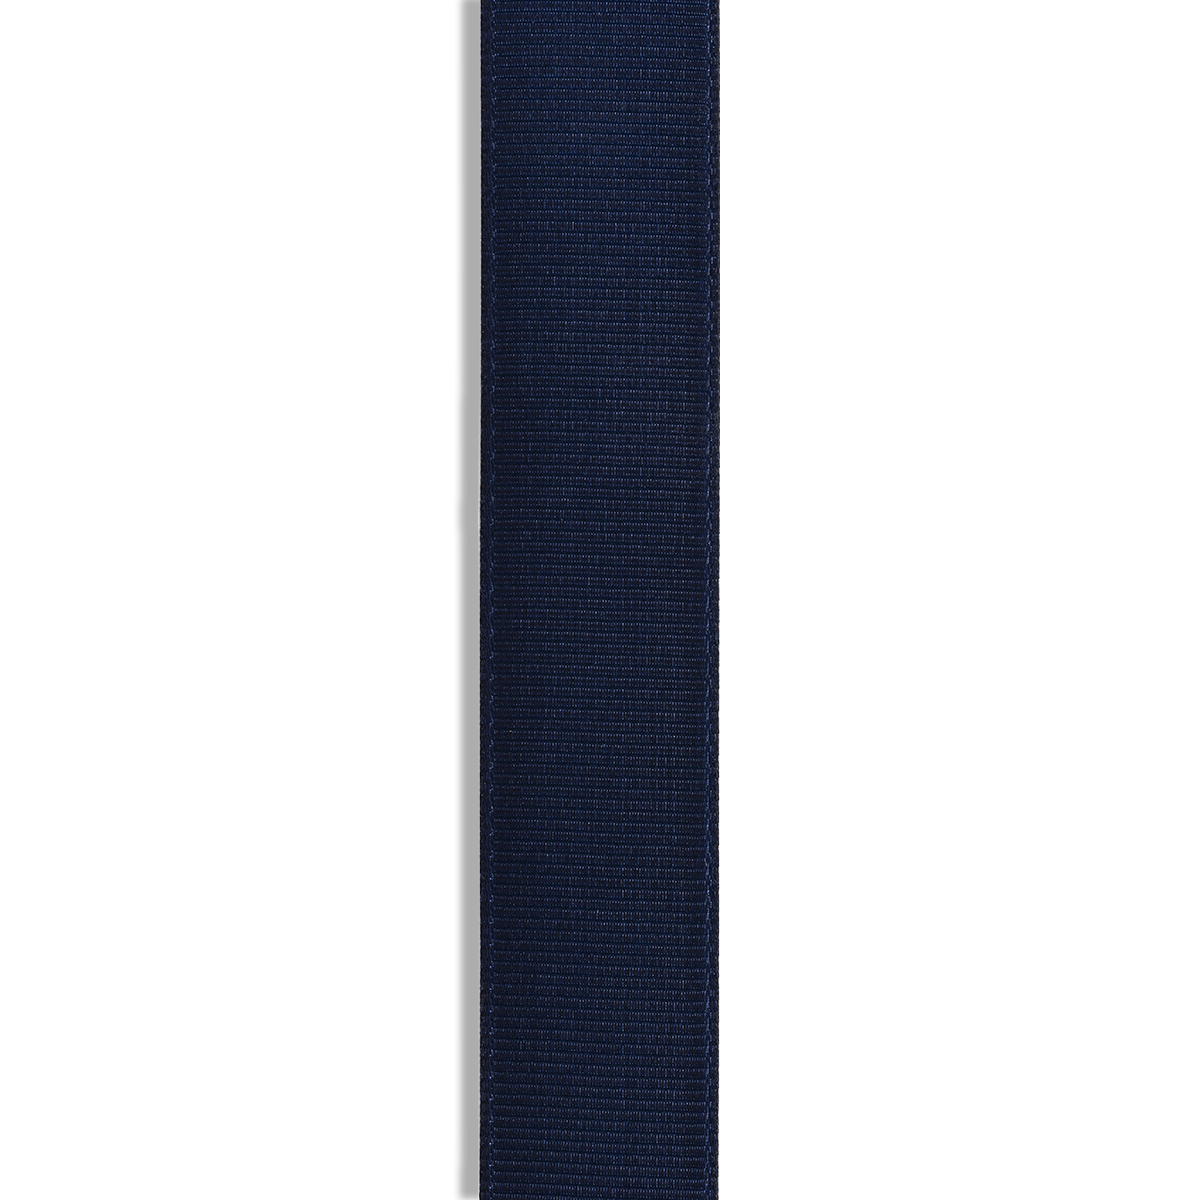 Grosgrain Ribbon - 7/8 x 100 yds, Navy Blue S-11631NB - Uline